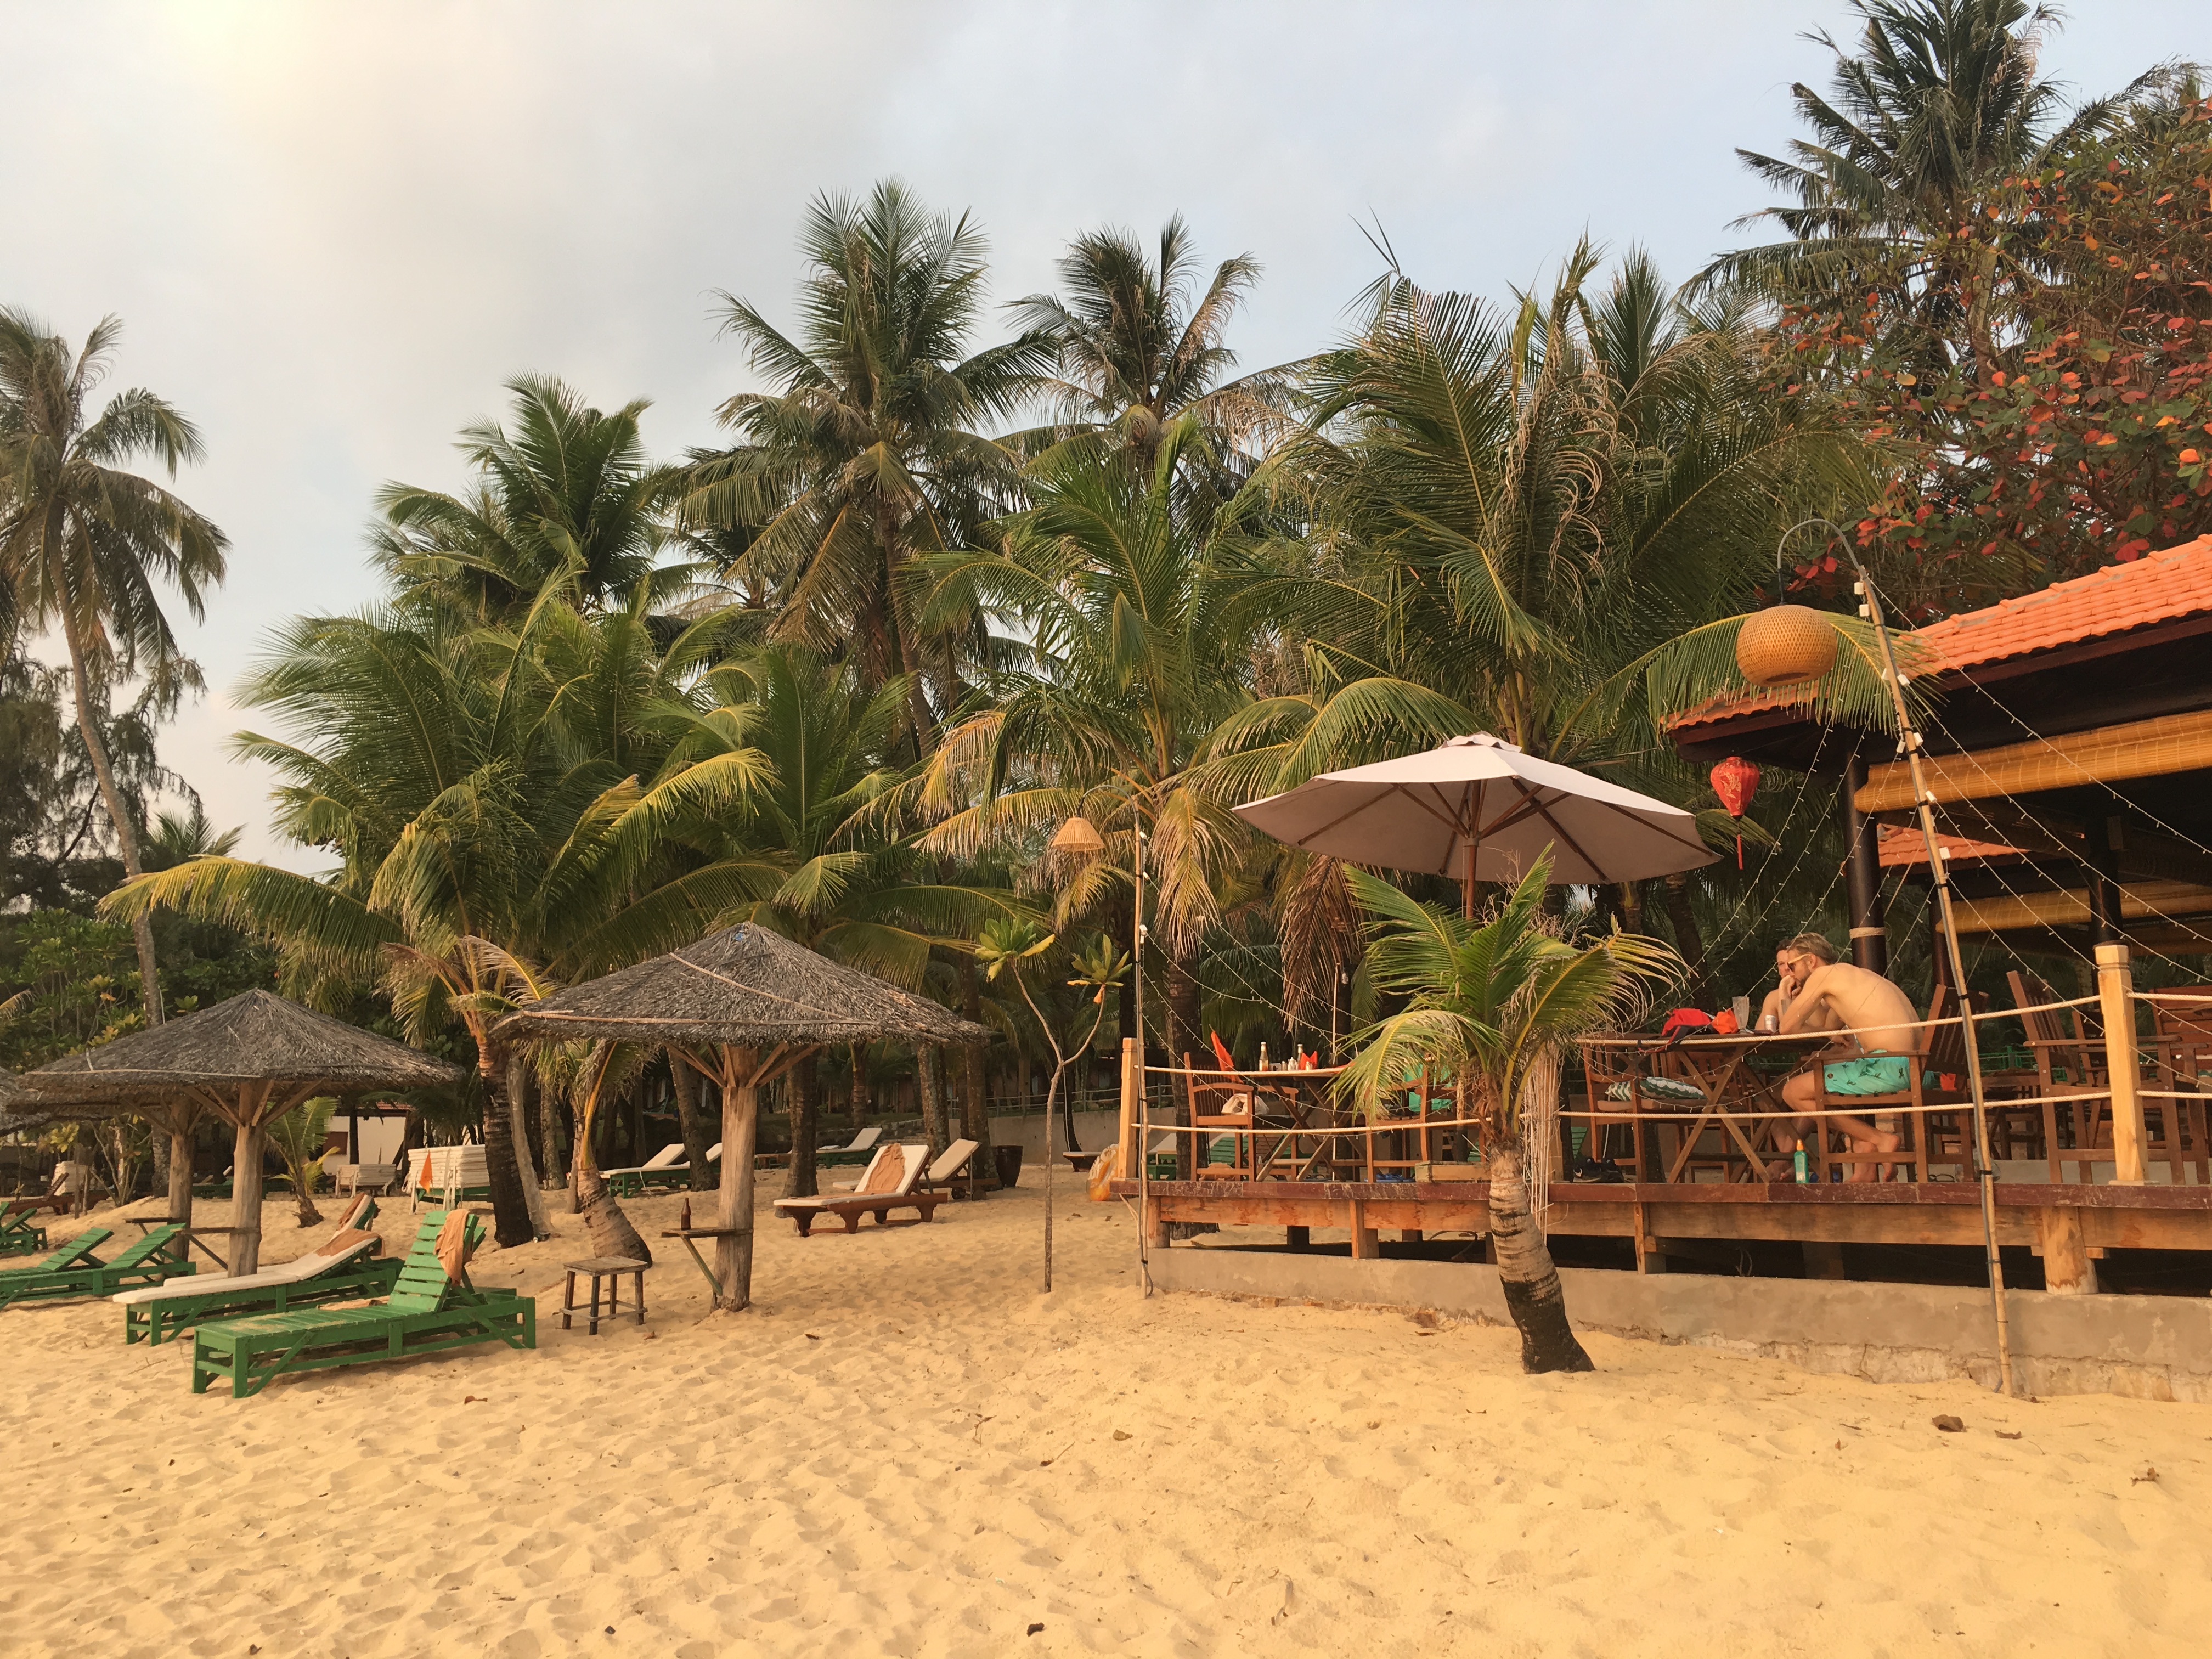 The beach at Thanh Kieu Beach Resort in Phu Quoc, Vietnam.